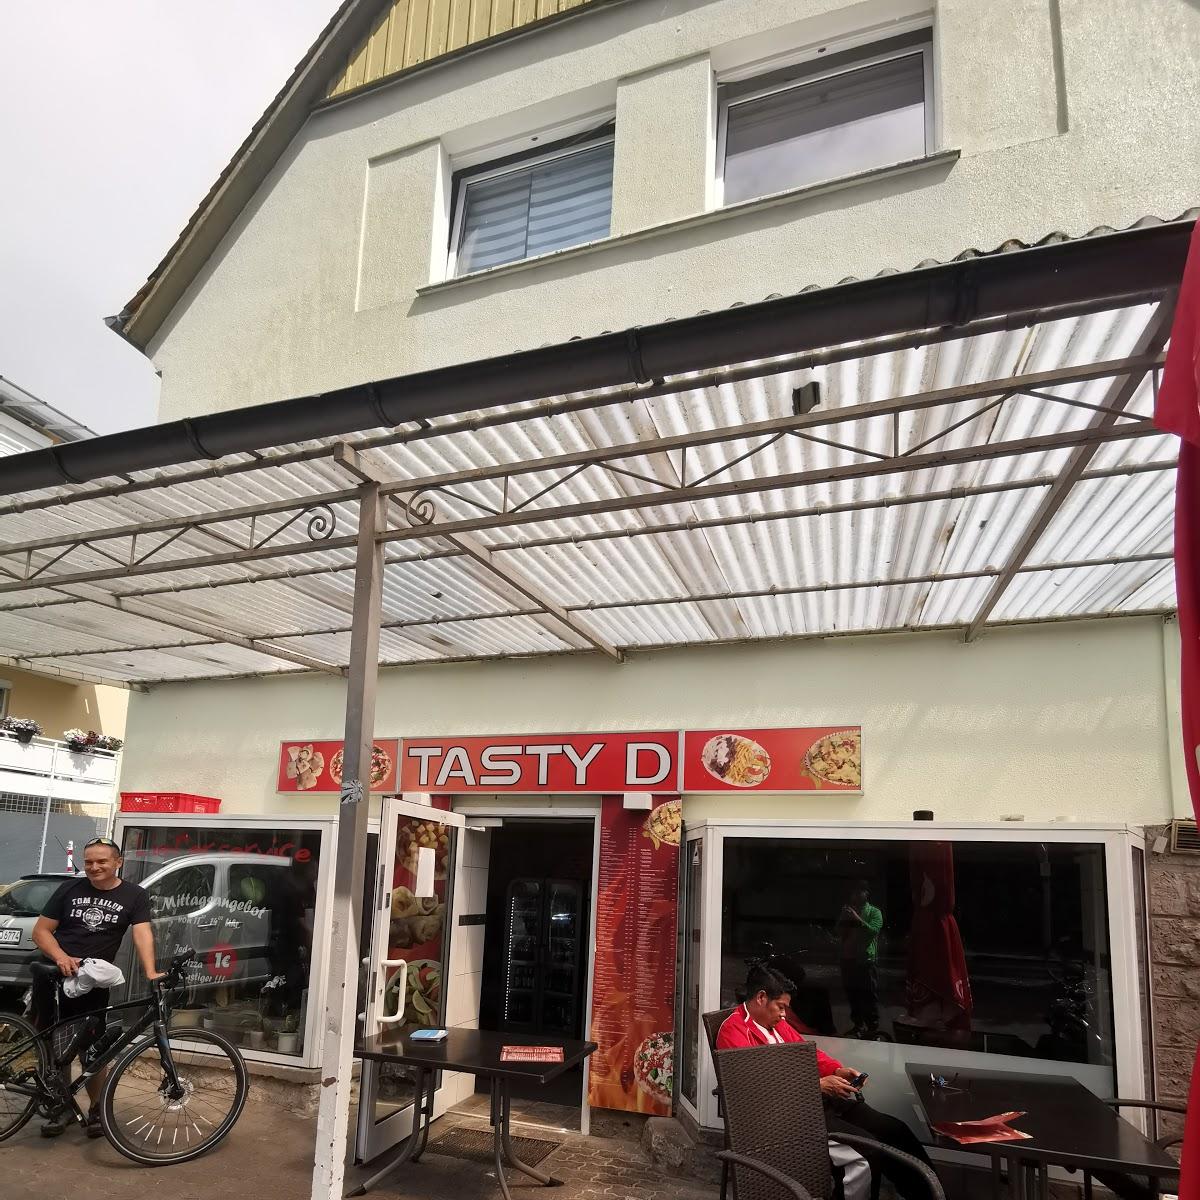 Restaurant "Tasty D UG (haftungsbeschränkt)" in Göttingen